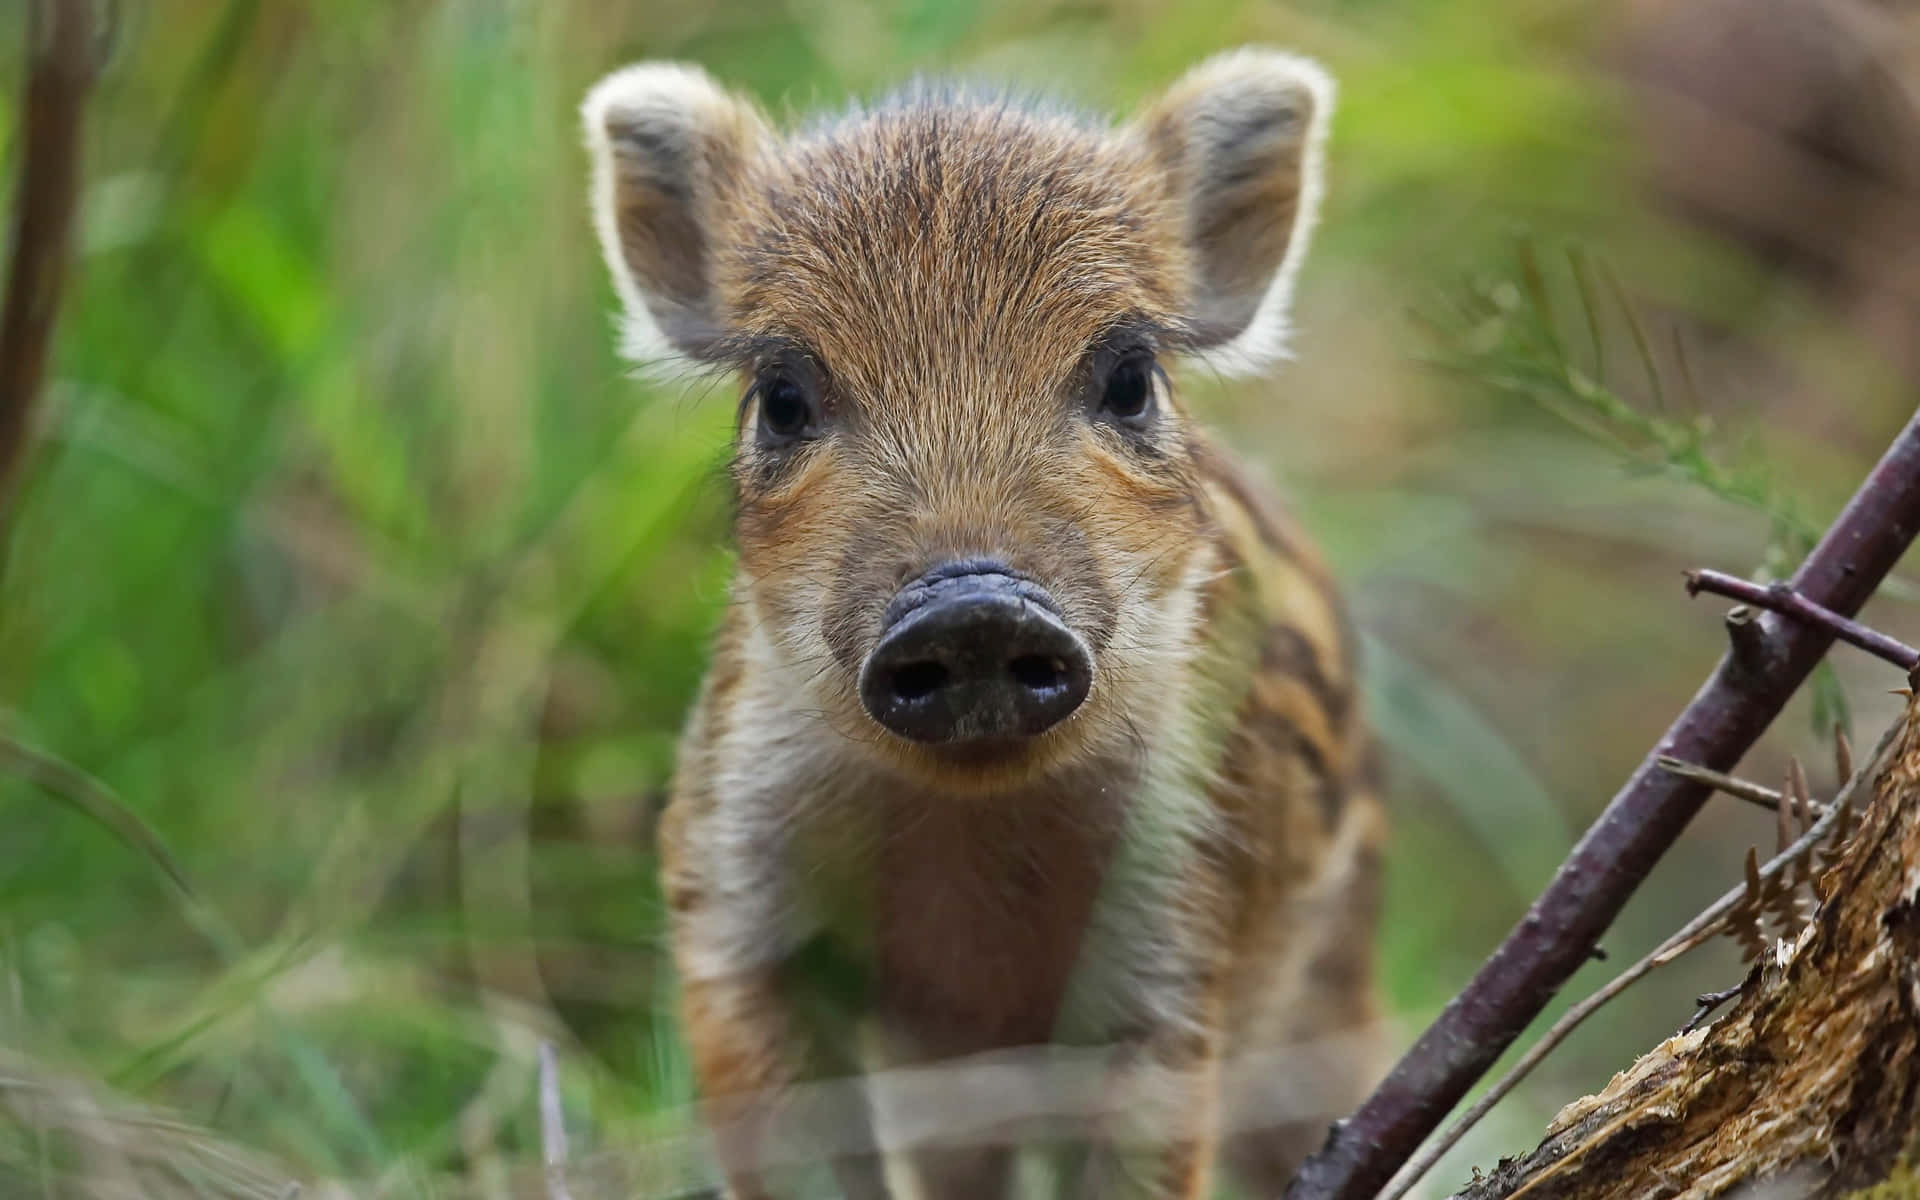 A Charming Cute Piggy Enjoying Nature